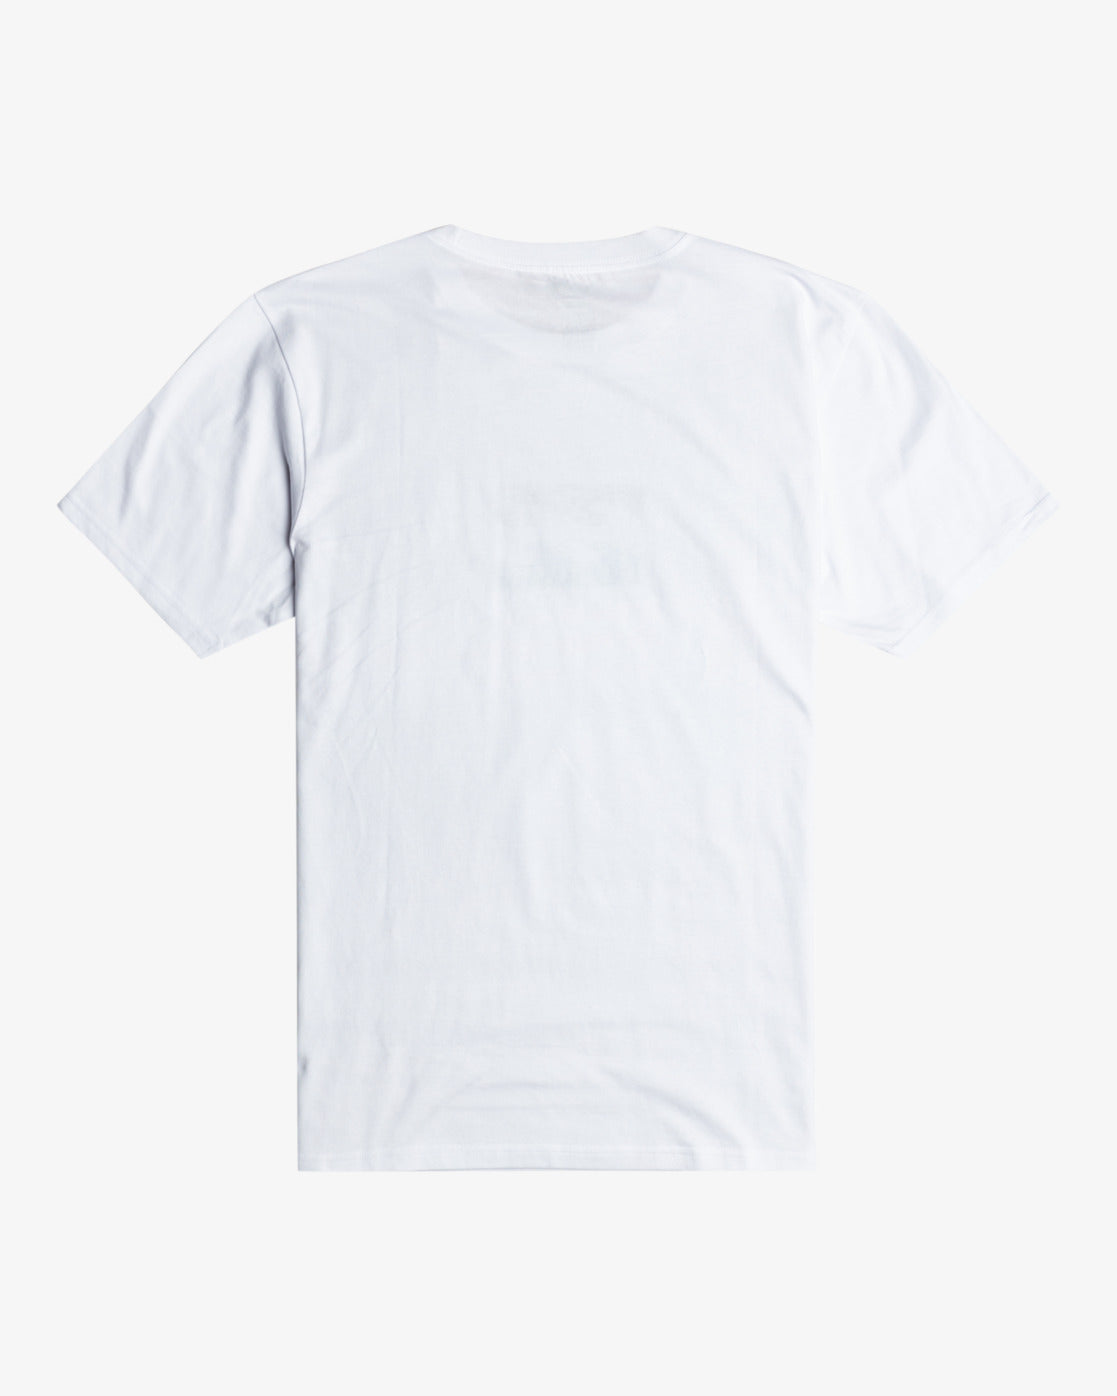 Billabong Team Wave T-Shirt in White